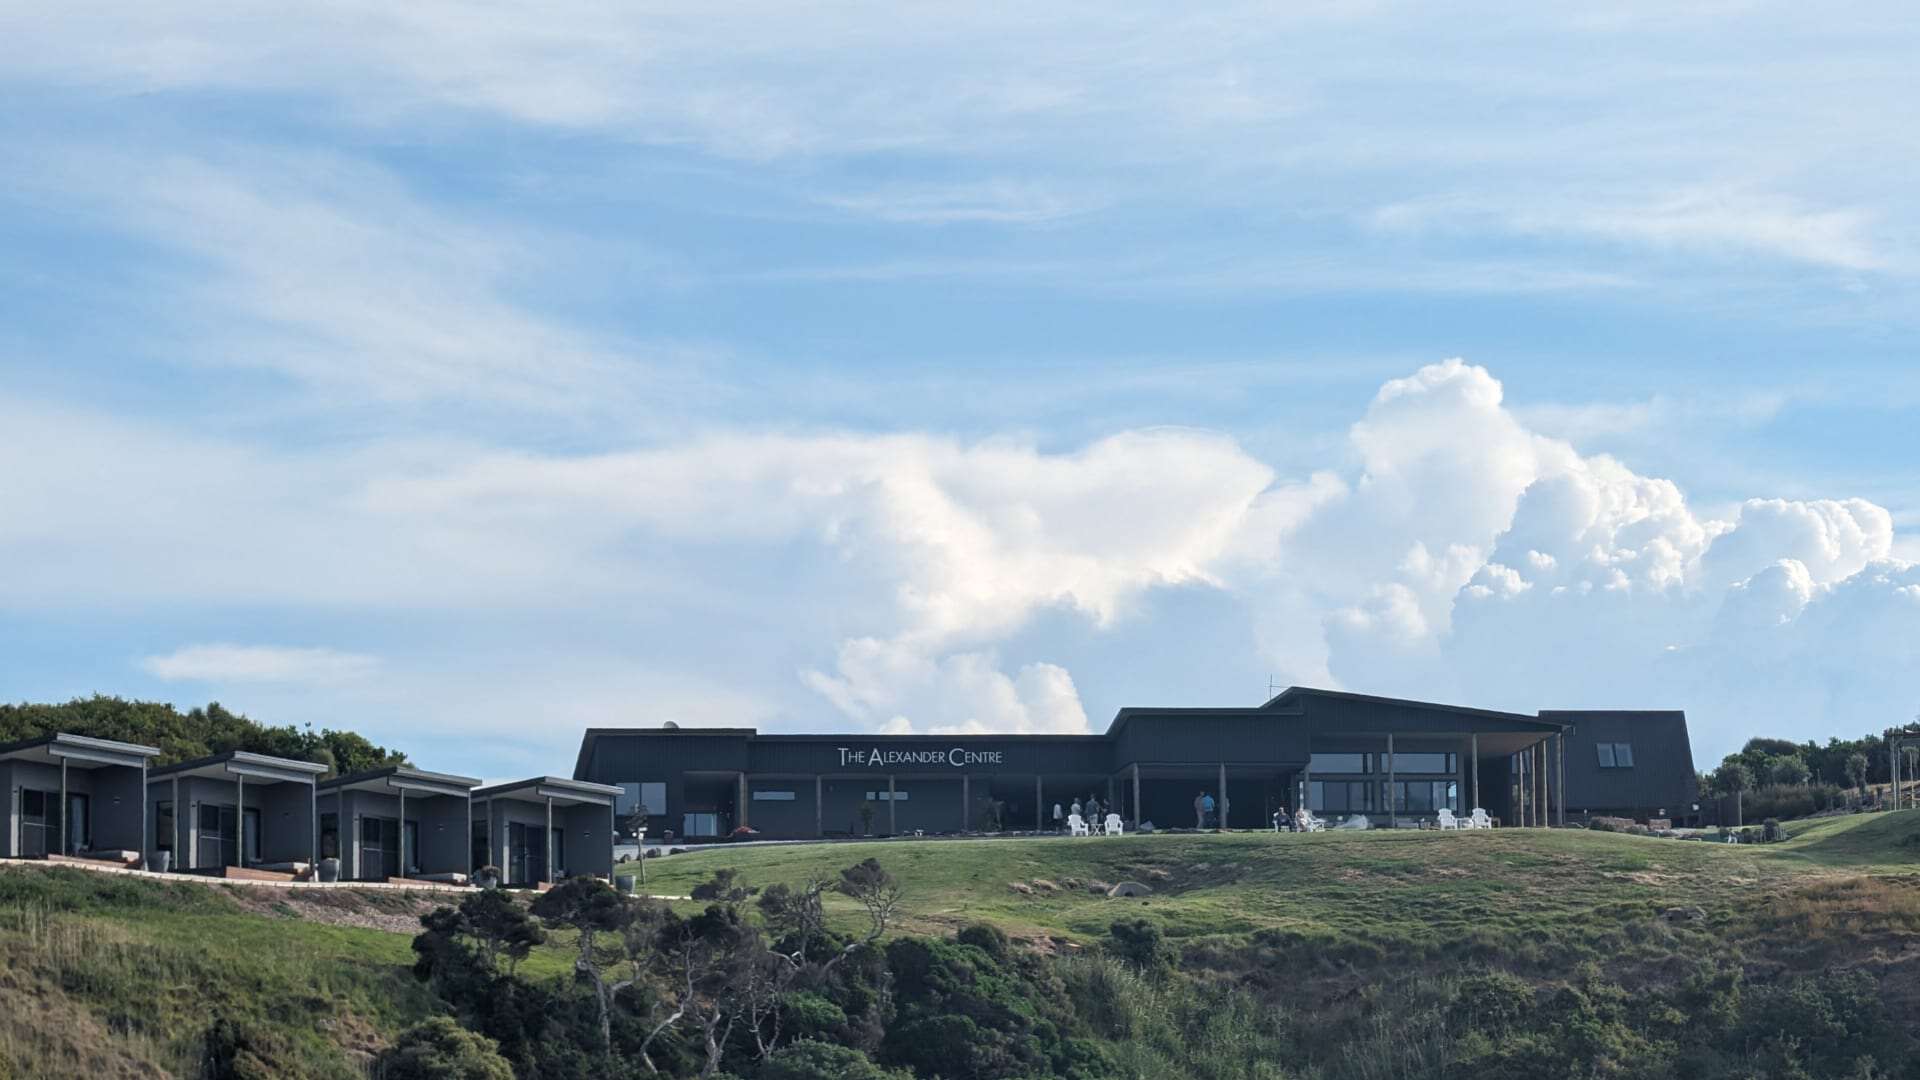 Modern facility on grassy hill under cloudy sky